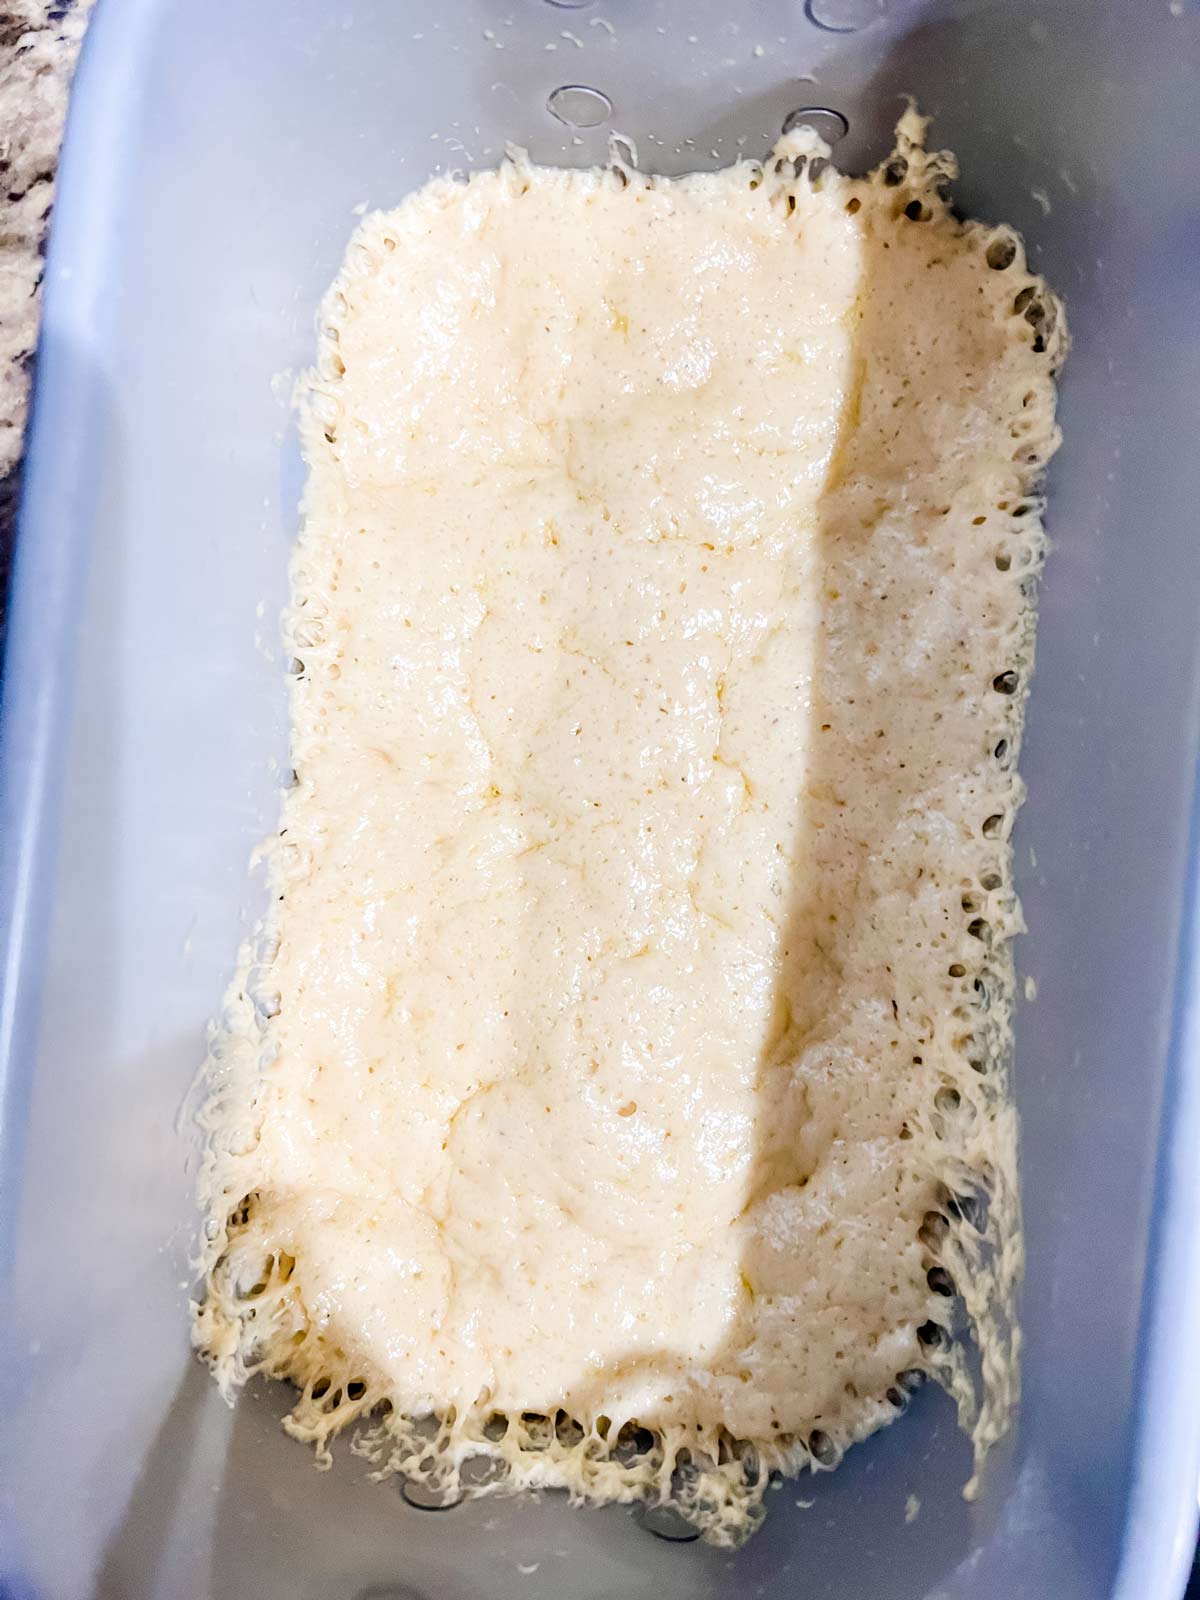 Brioche dough in the pan of a bread machine.